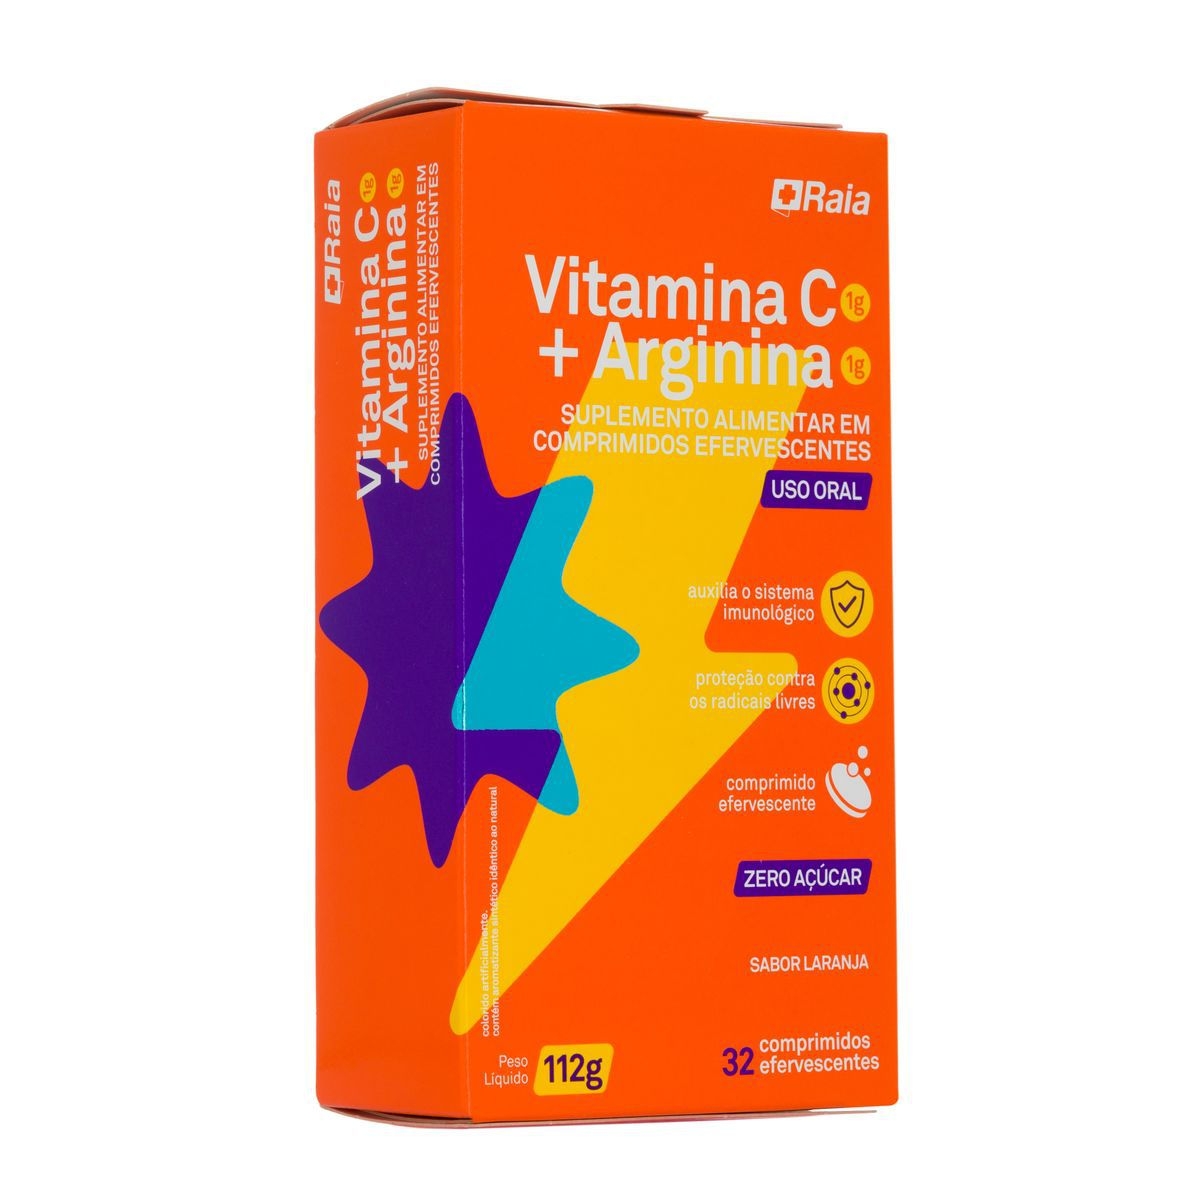 Vitamina C + Arginina Raia 32 Comprimidos Efervescentes